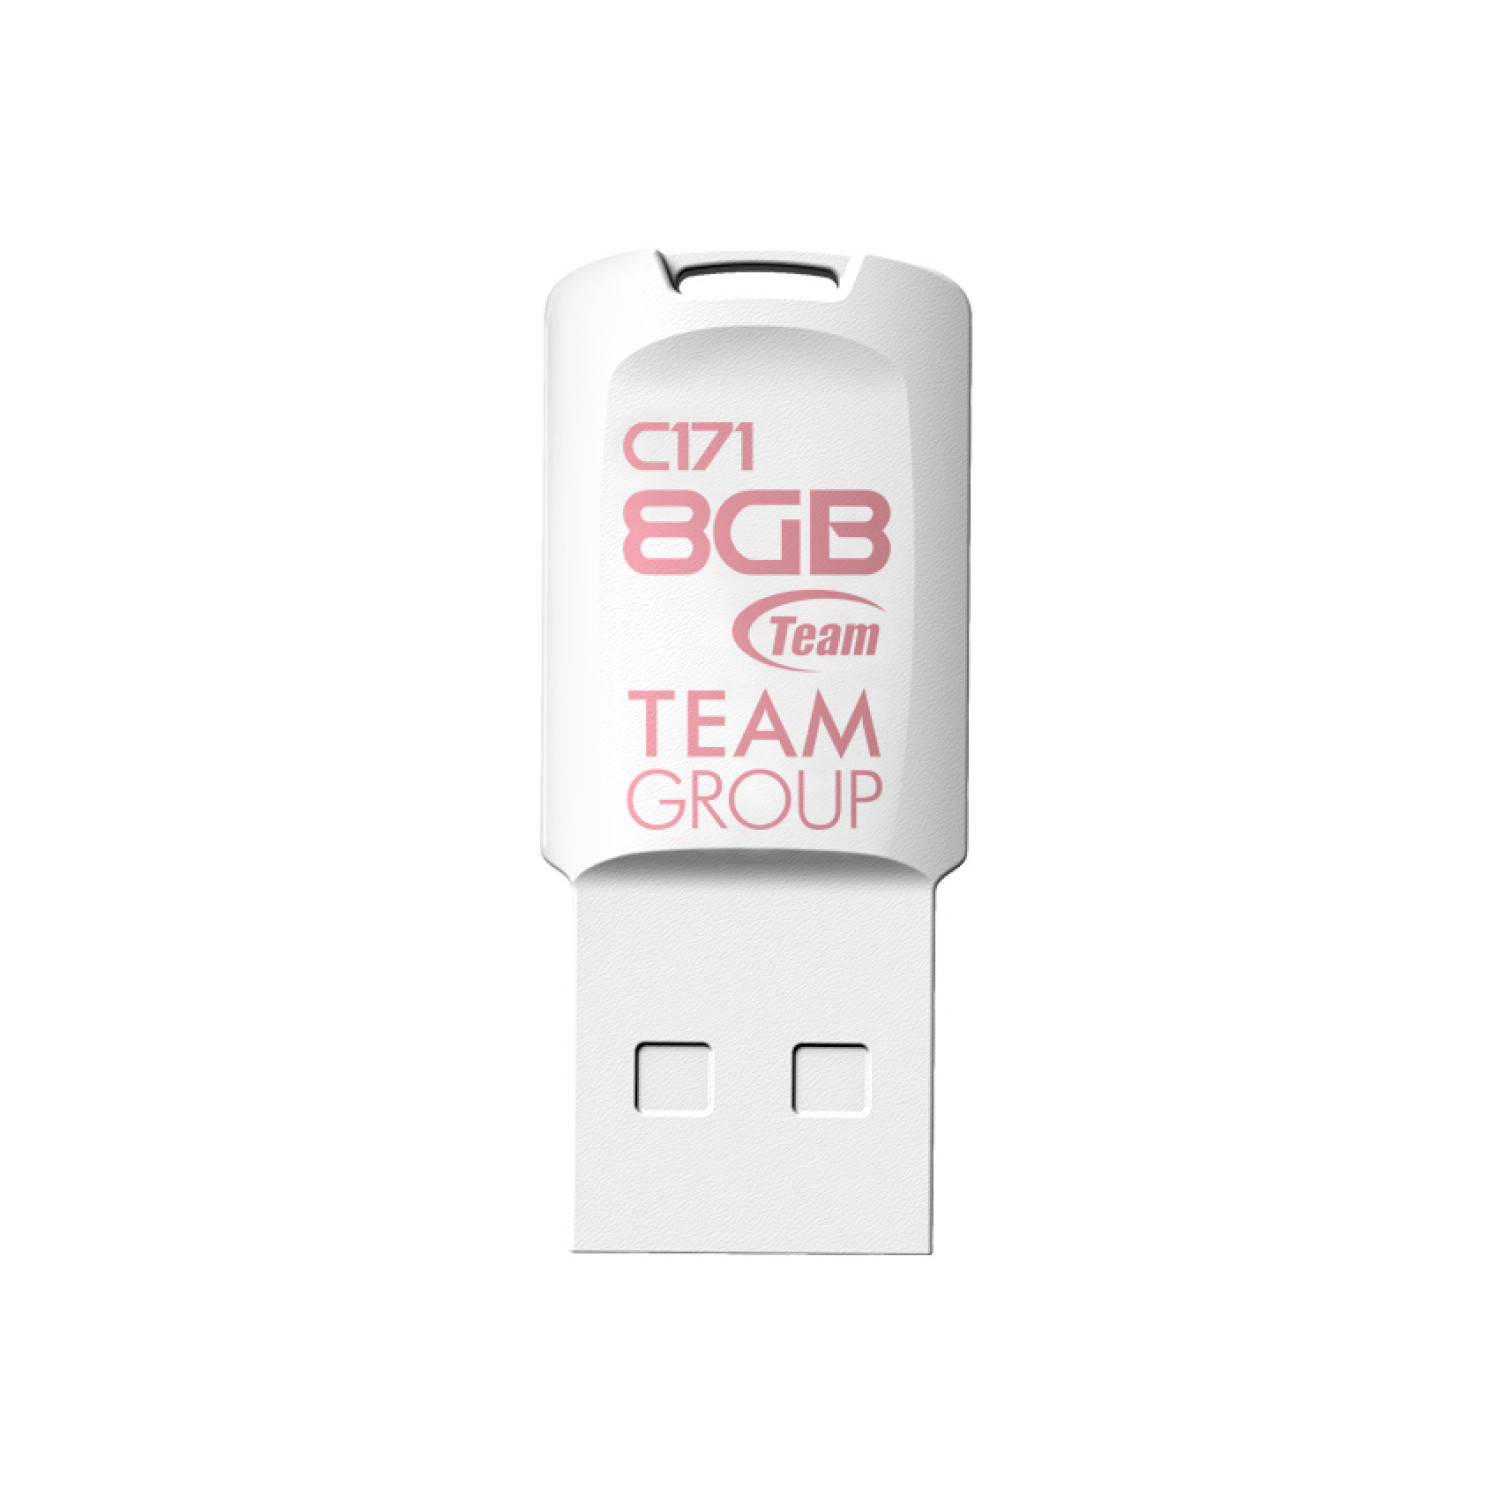 USB памет Team Group C171, 8GB, USB 2.0, Бял